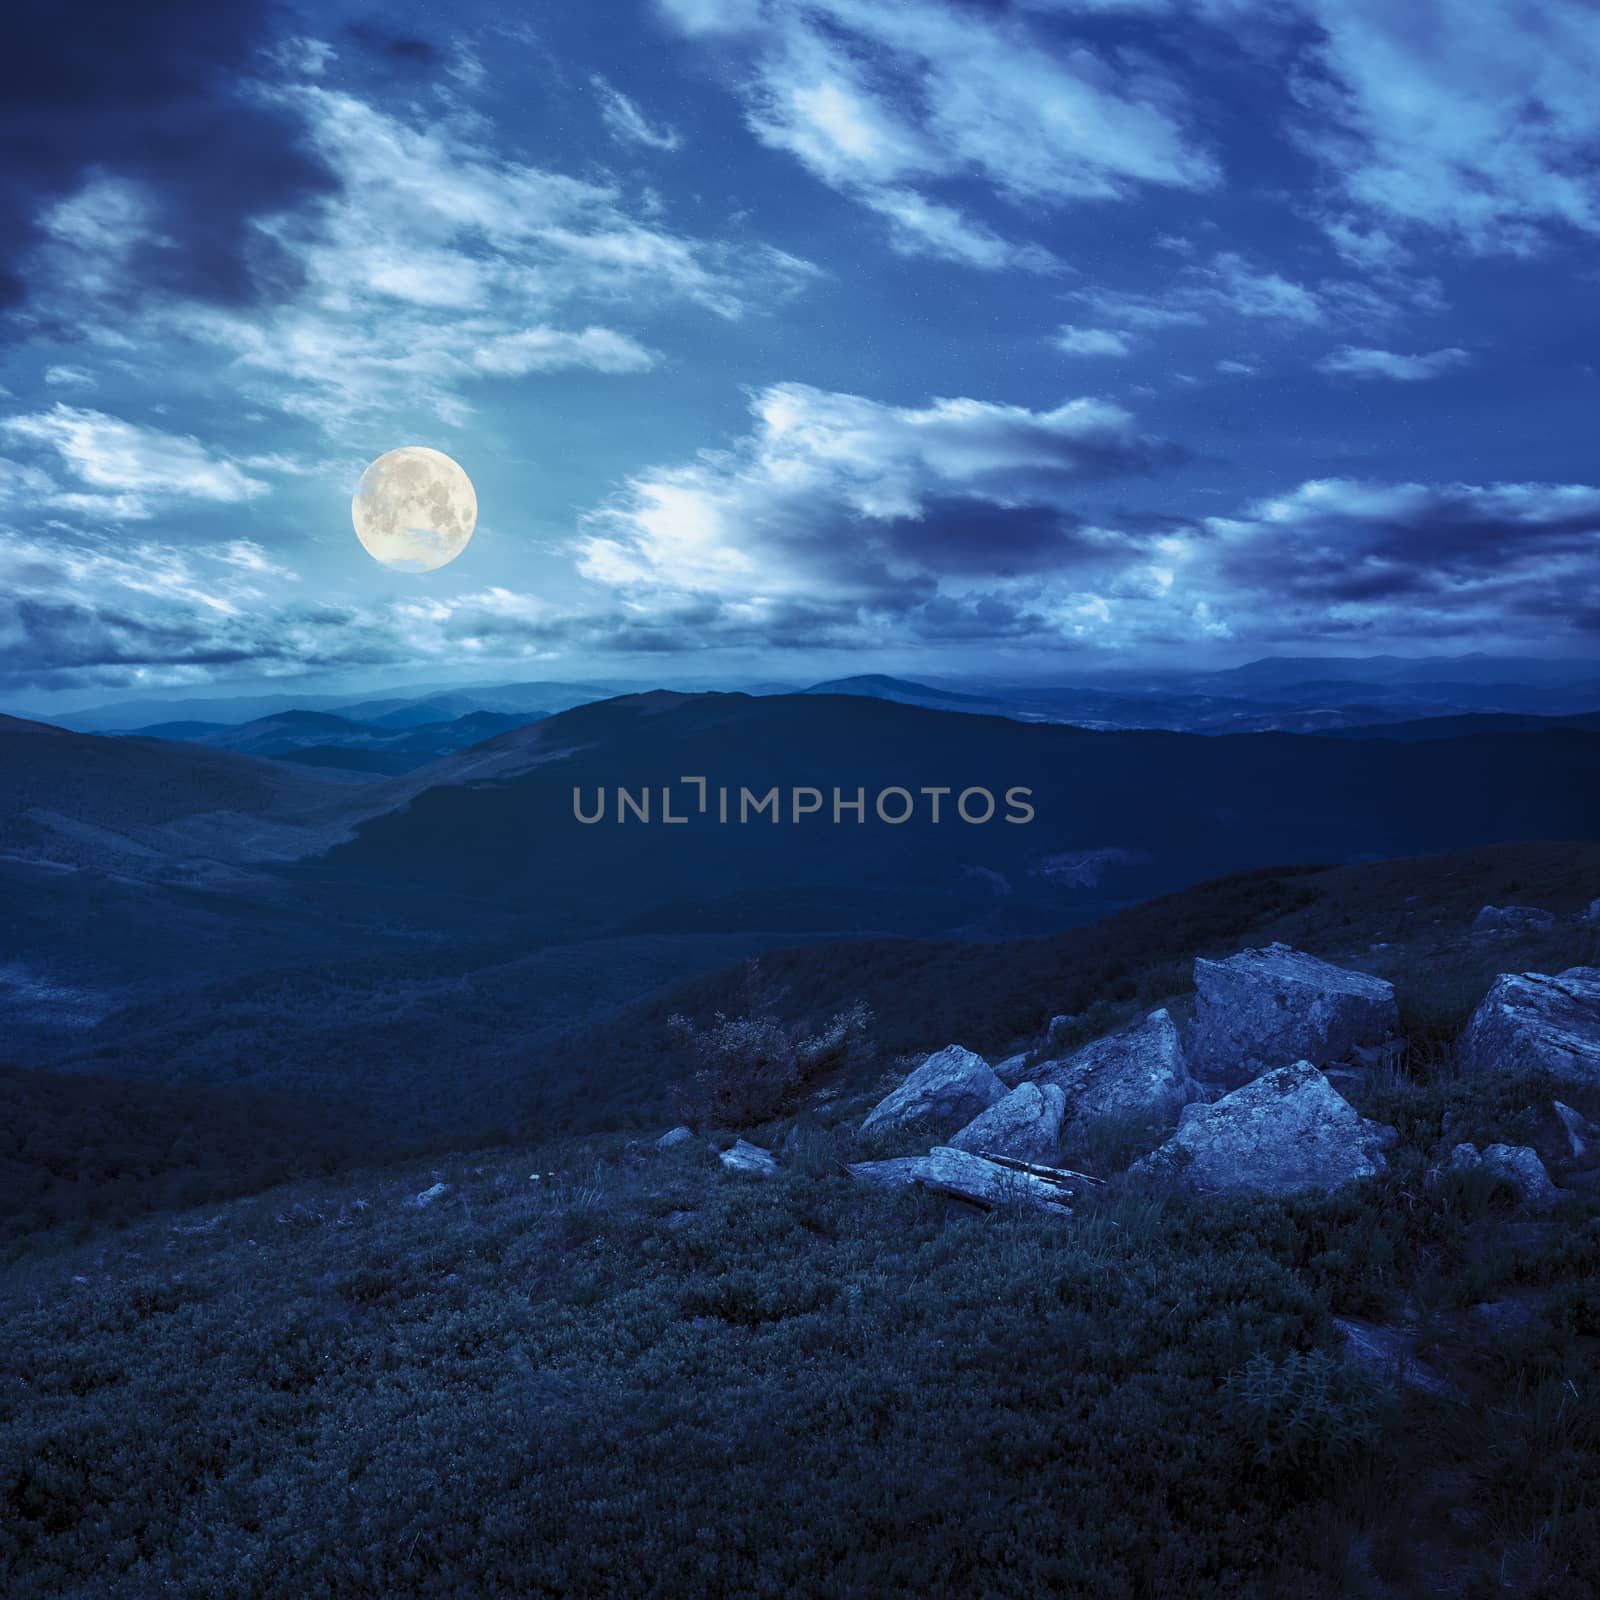 white sharp stones on the hillside of high mountains at night in full moon light